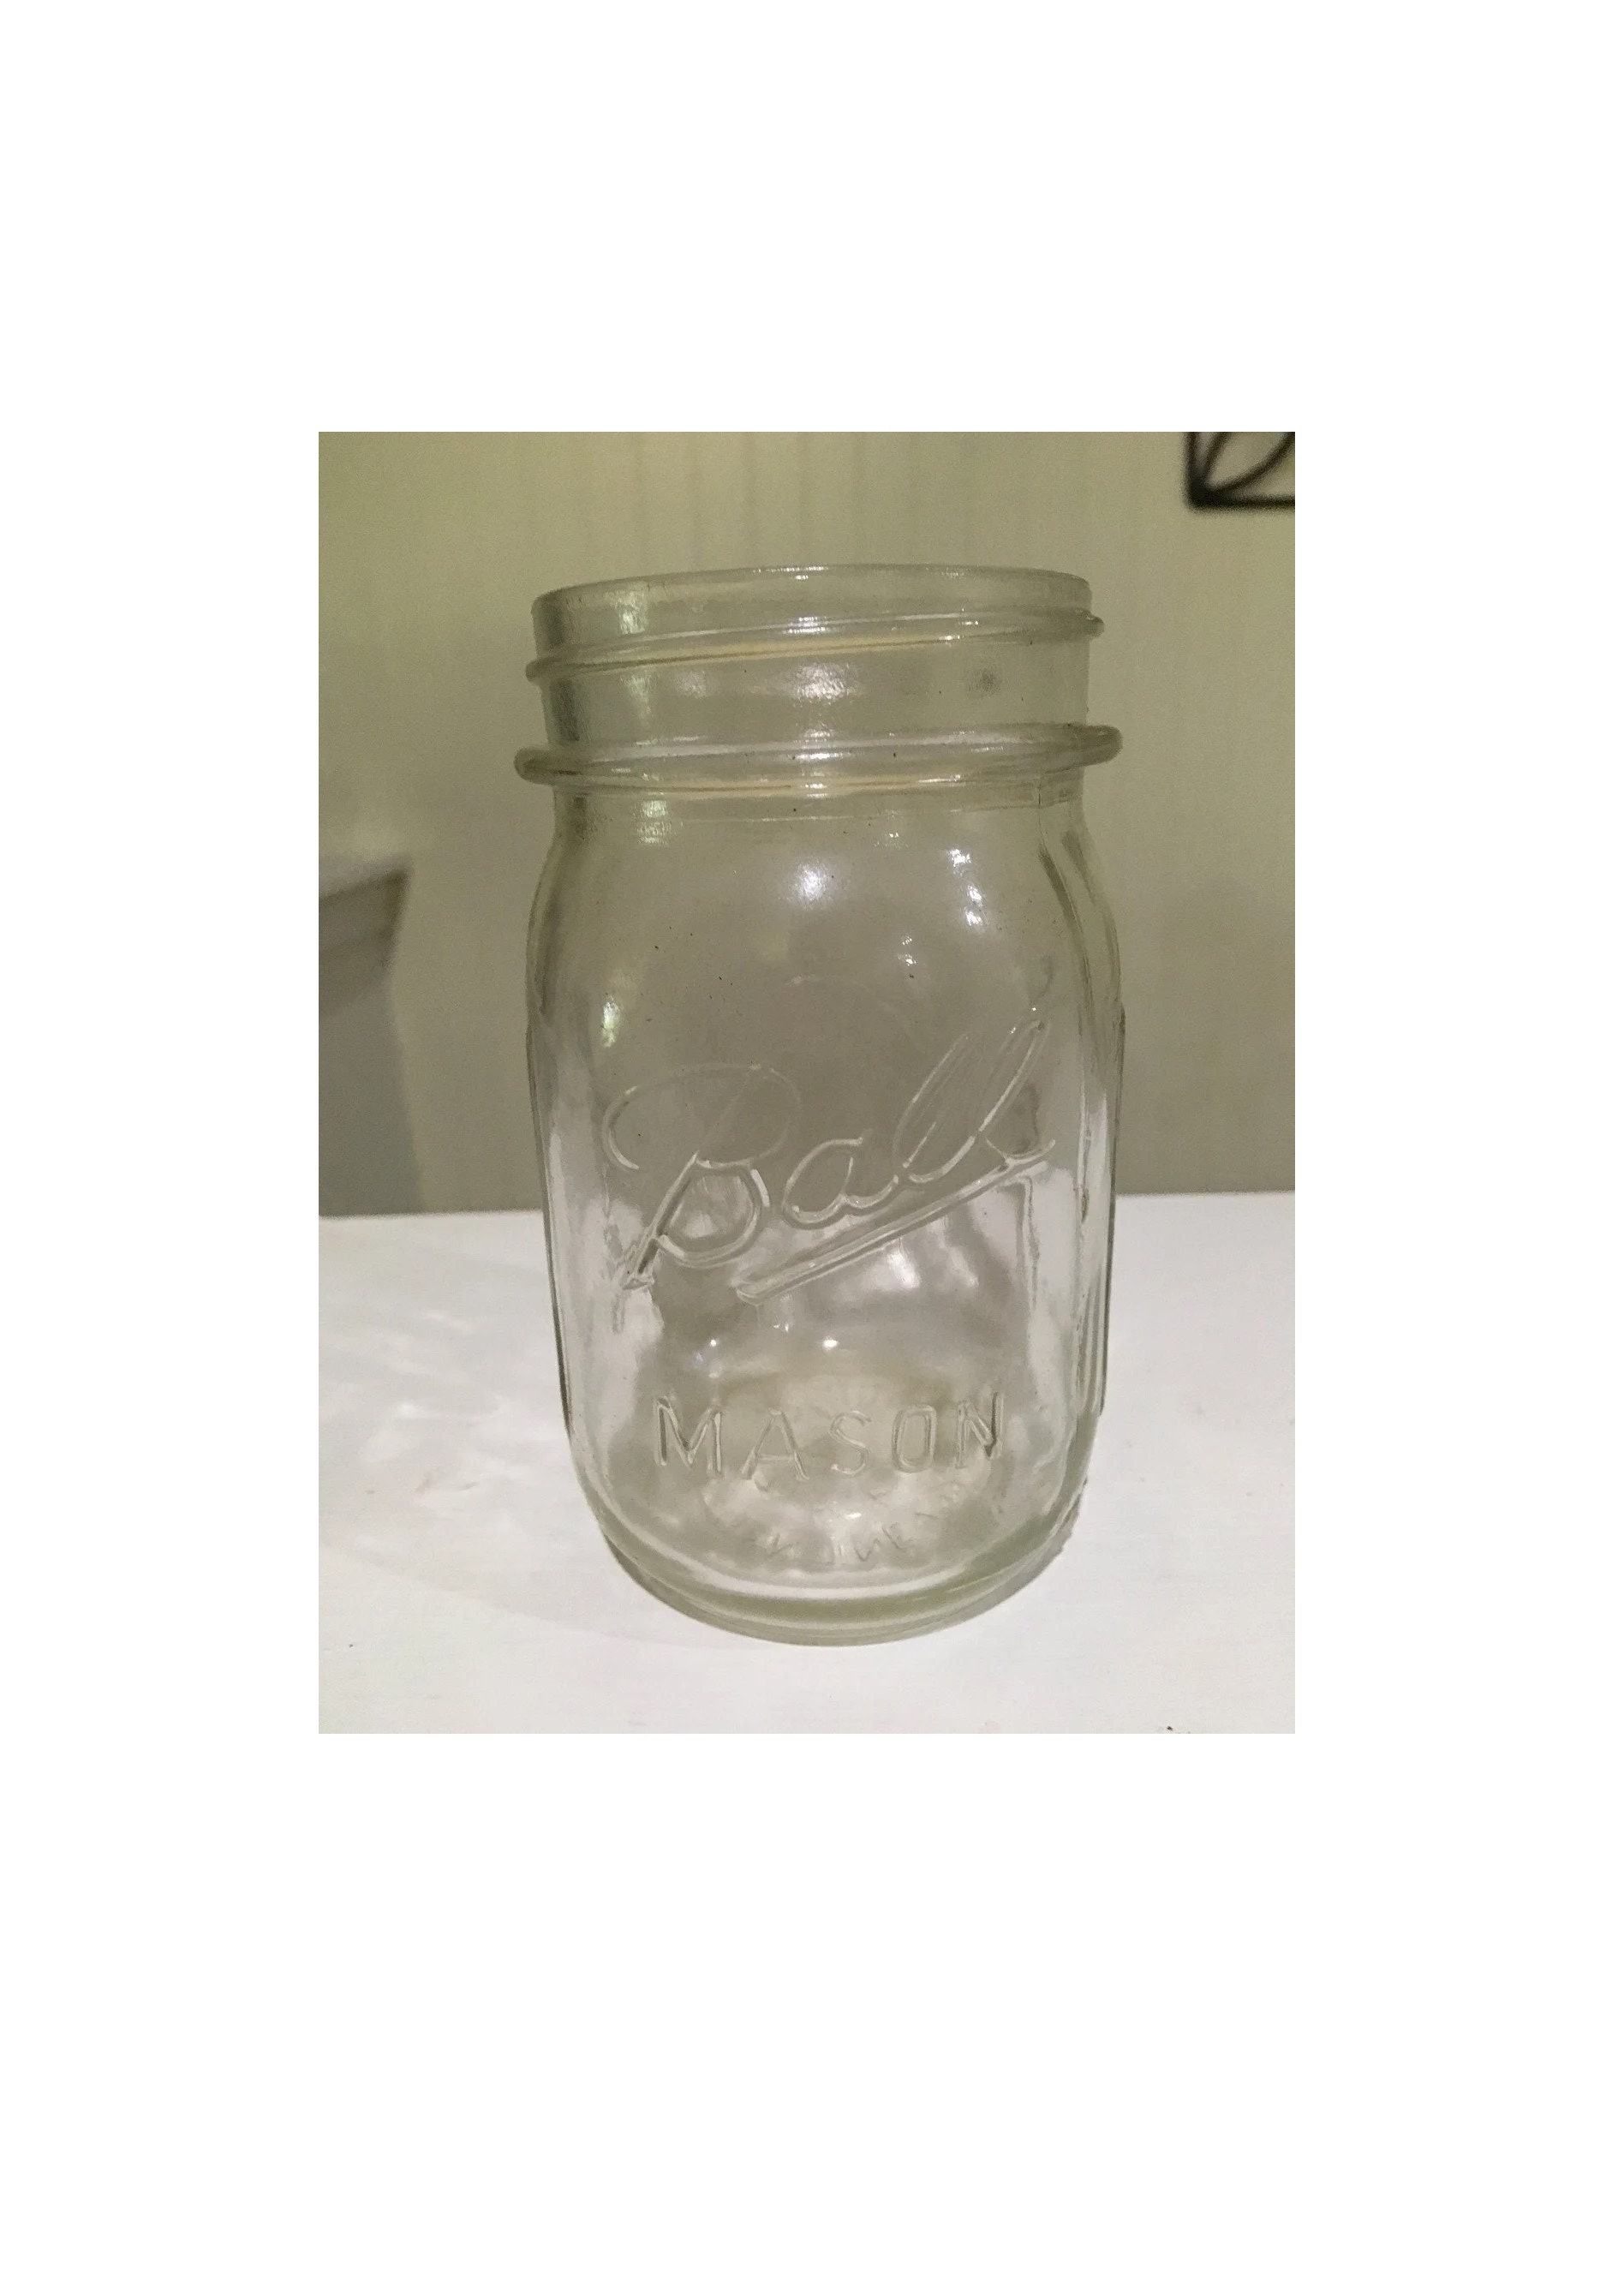 Vintage 1977 Jubilee Kitchen Wax Half Full Liquid White Glass Jar